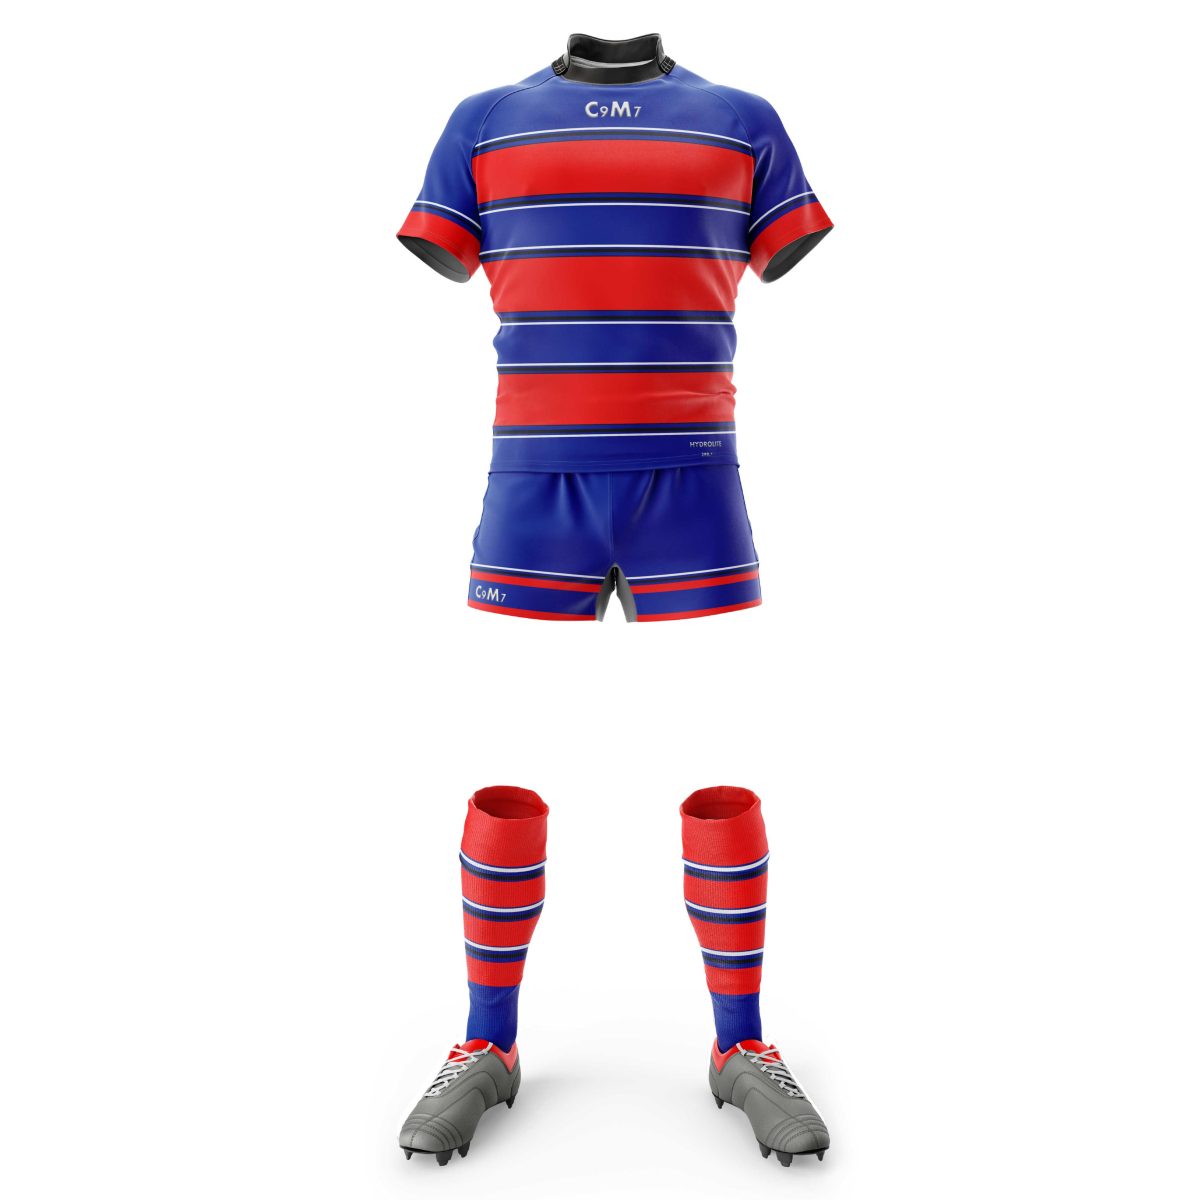 The Scrum Custom Rugby League Kit, Designed For Australia $92.00